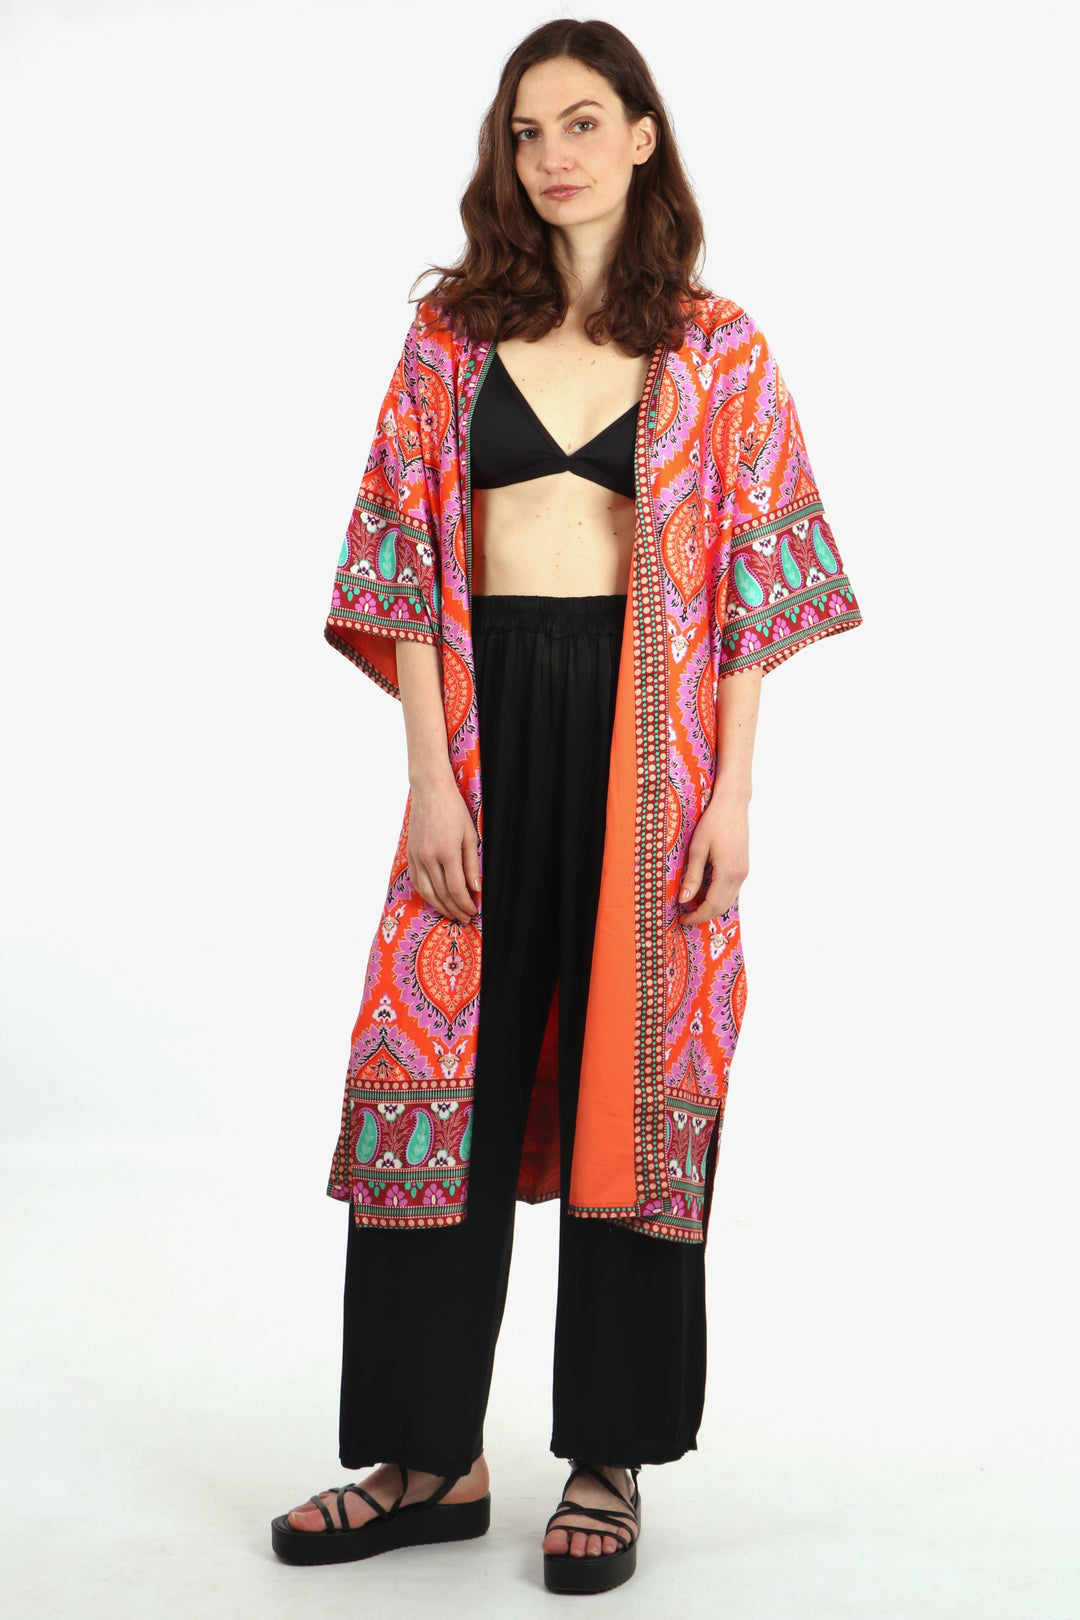 model wearing an orange madala print mid length open front kimono jacket with 3/4 sleeves